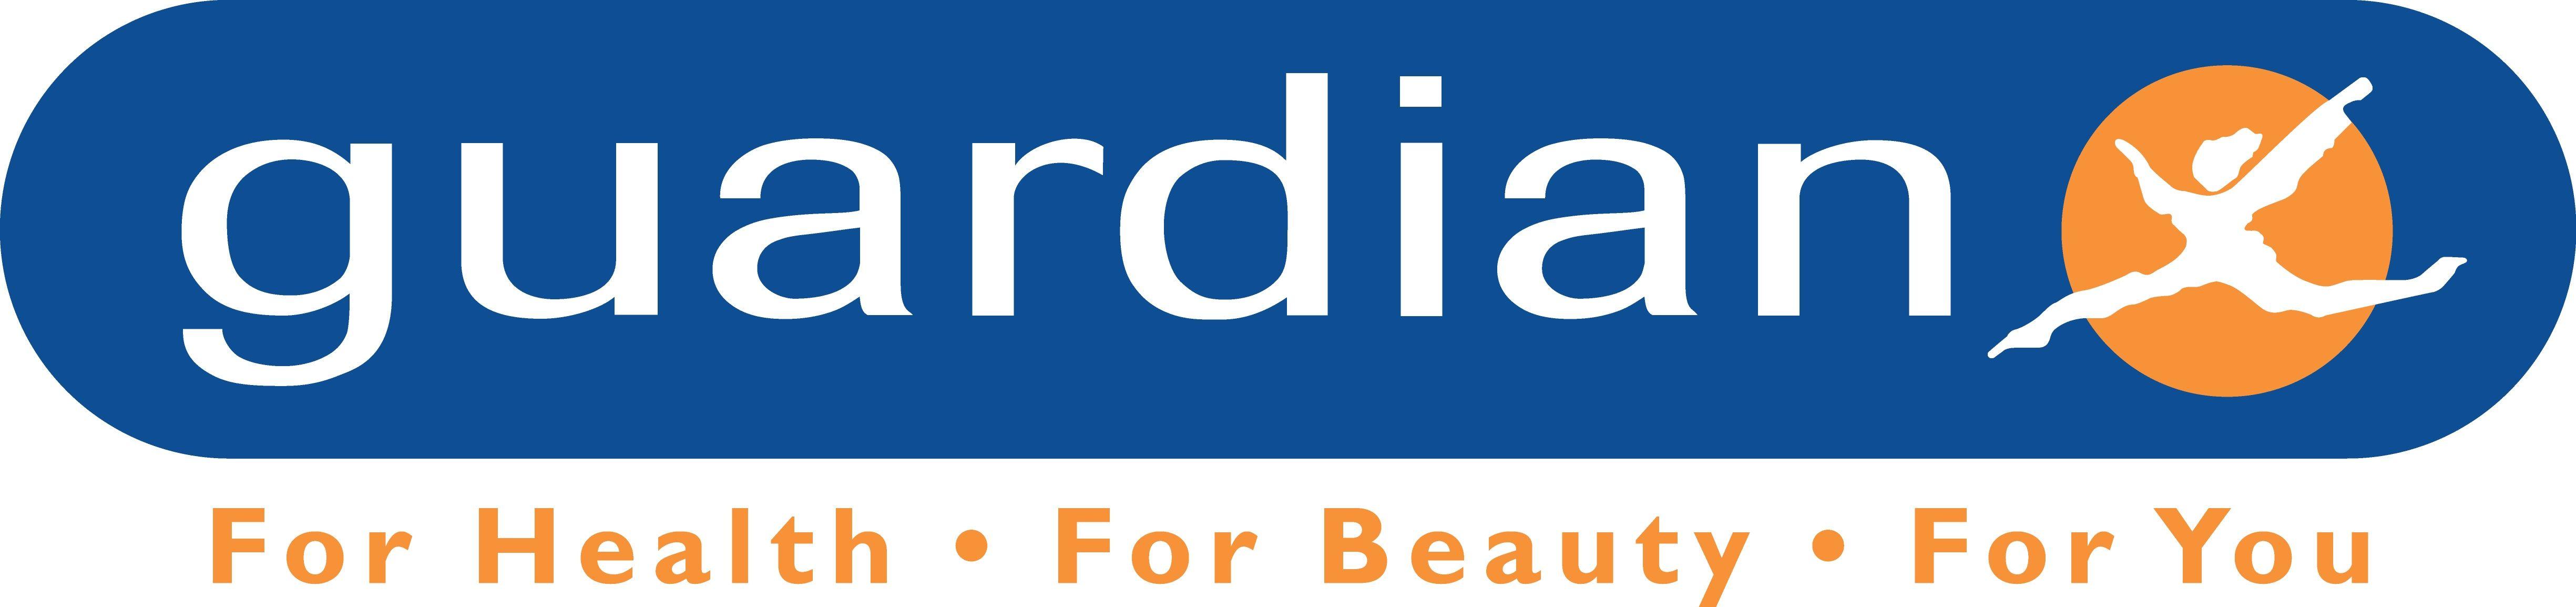 Guardian Logo - The guardian Logos